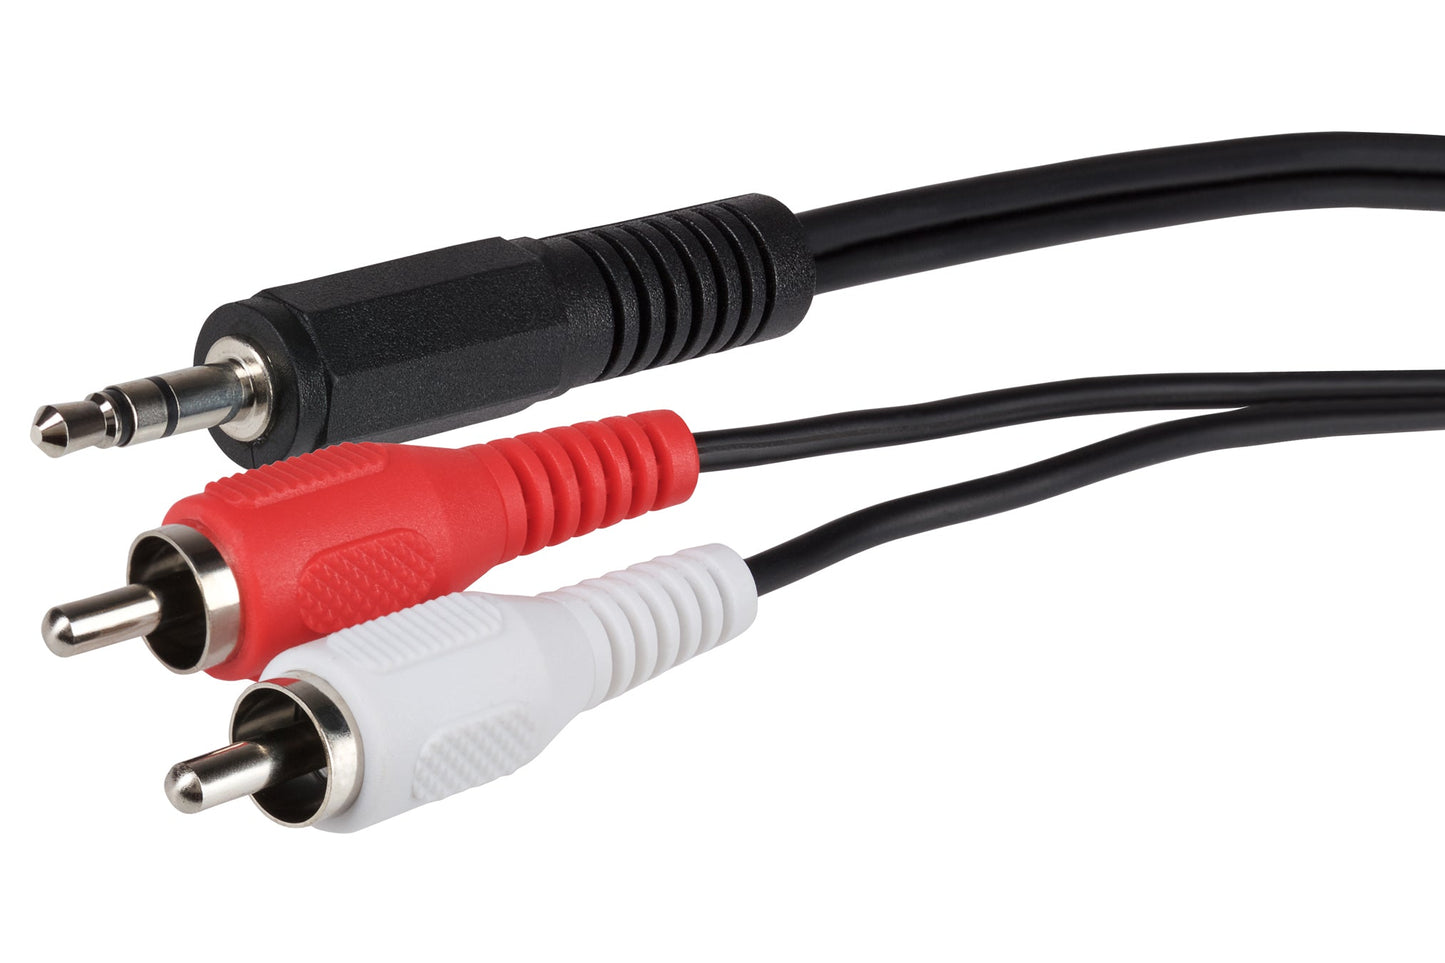 Maplin 3.5mm Aux Stereo 3-Pole Jack Plug to Twin RCA Phono Cable - Black - maplin.co.uk